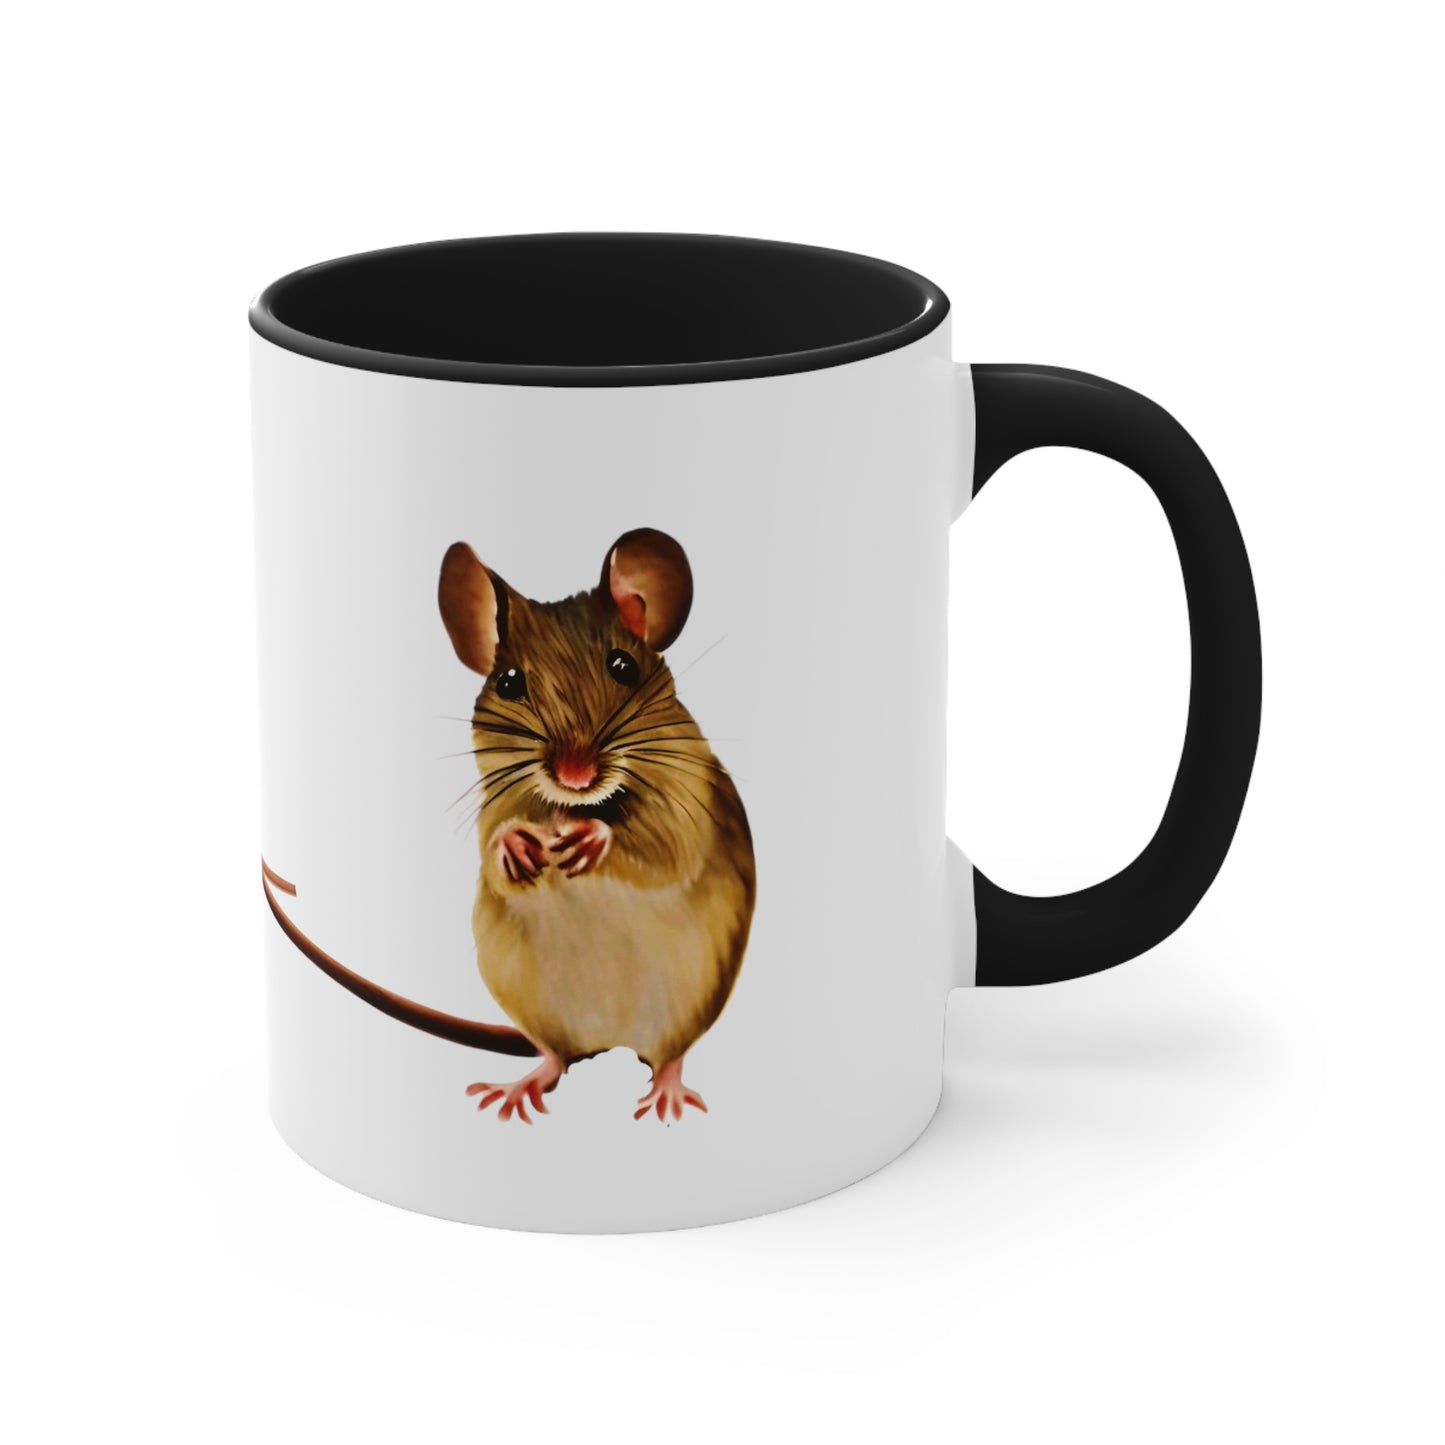 Adorable Mouse Ceramic Mug